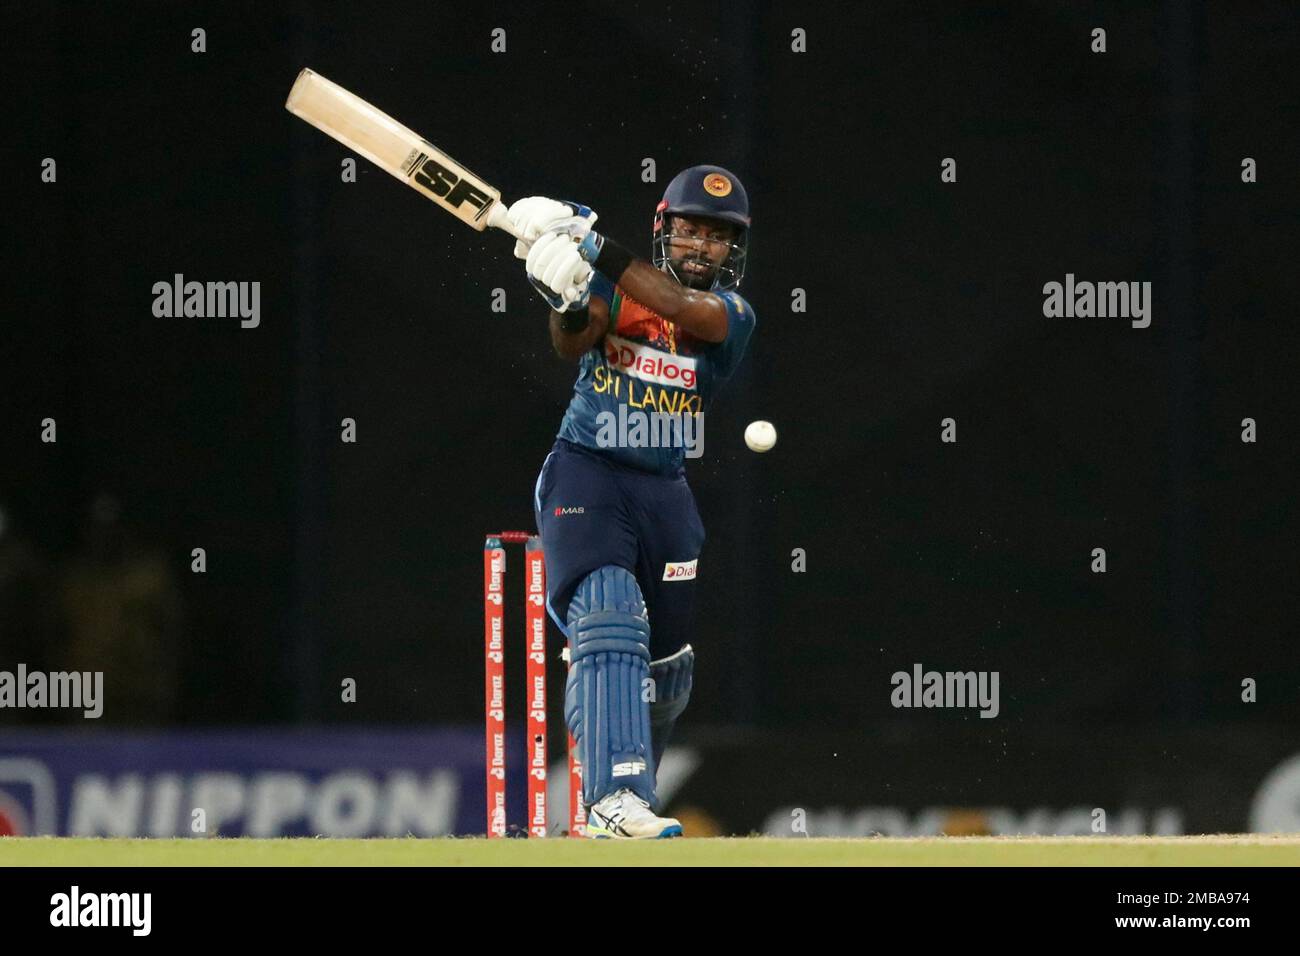 Sri Lankas Charith Asalanka plays a shot during the second Twenty20 cricket match between Sri Lanka and Australia in Colombo, Sri Lanka, Wednesday, June 8, 2022